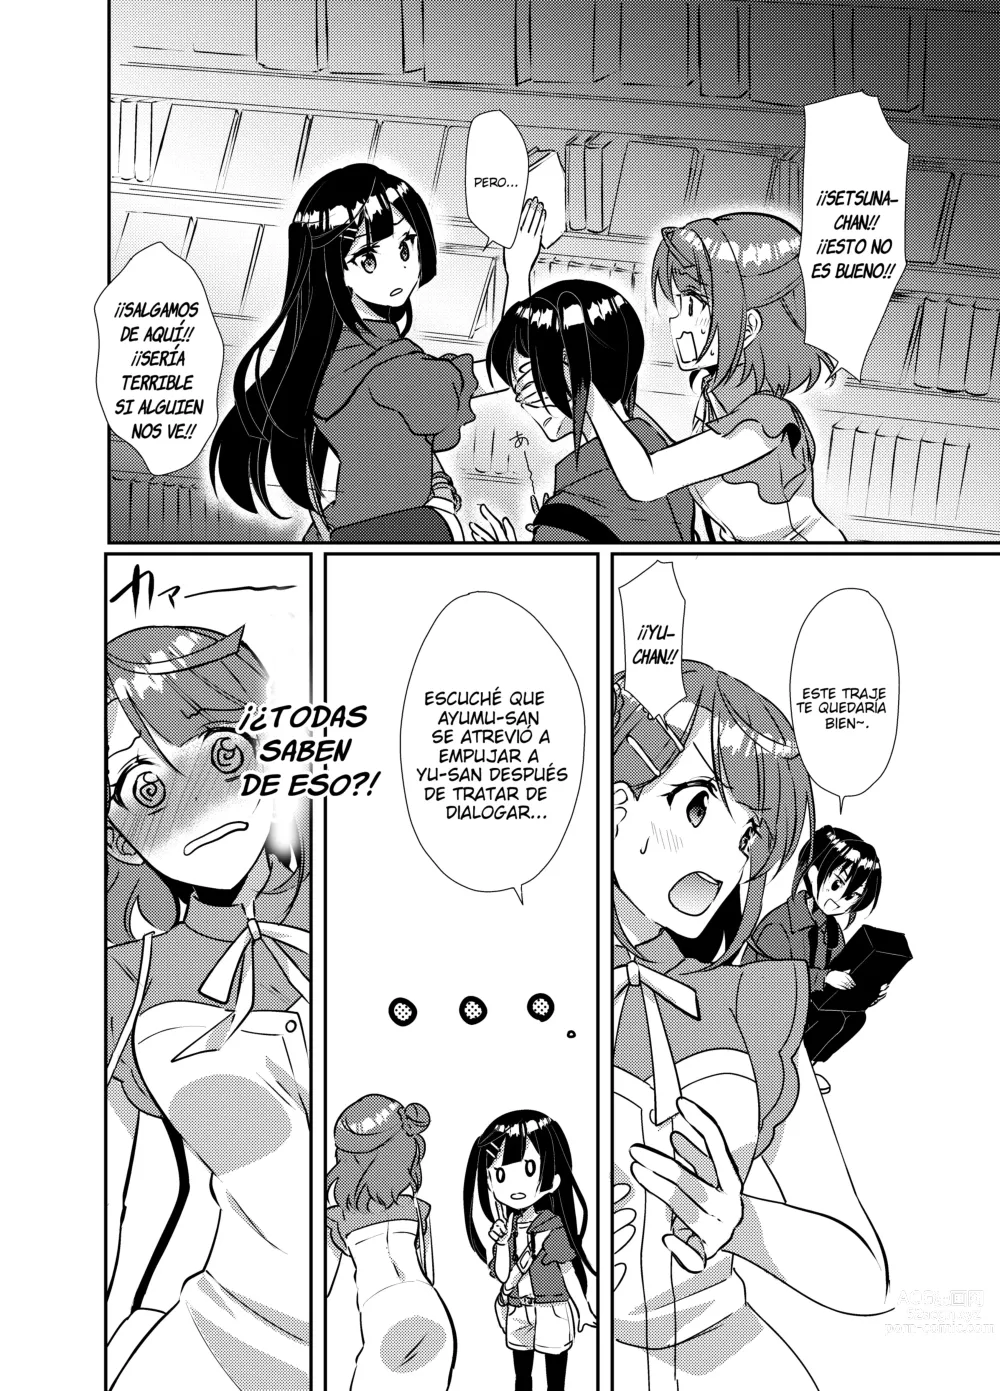 Page 6 of doujinshi Relato Yurisitico